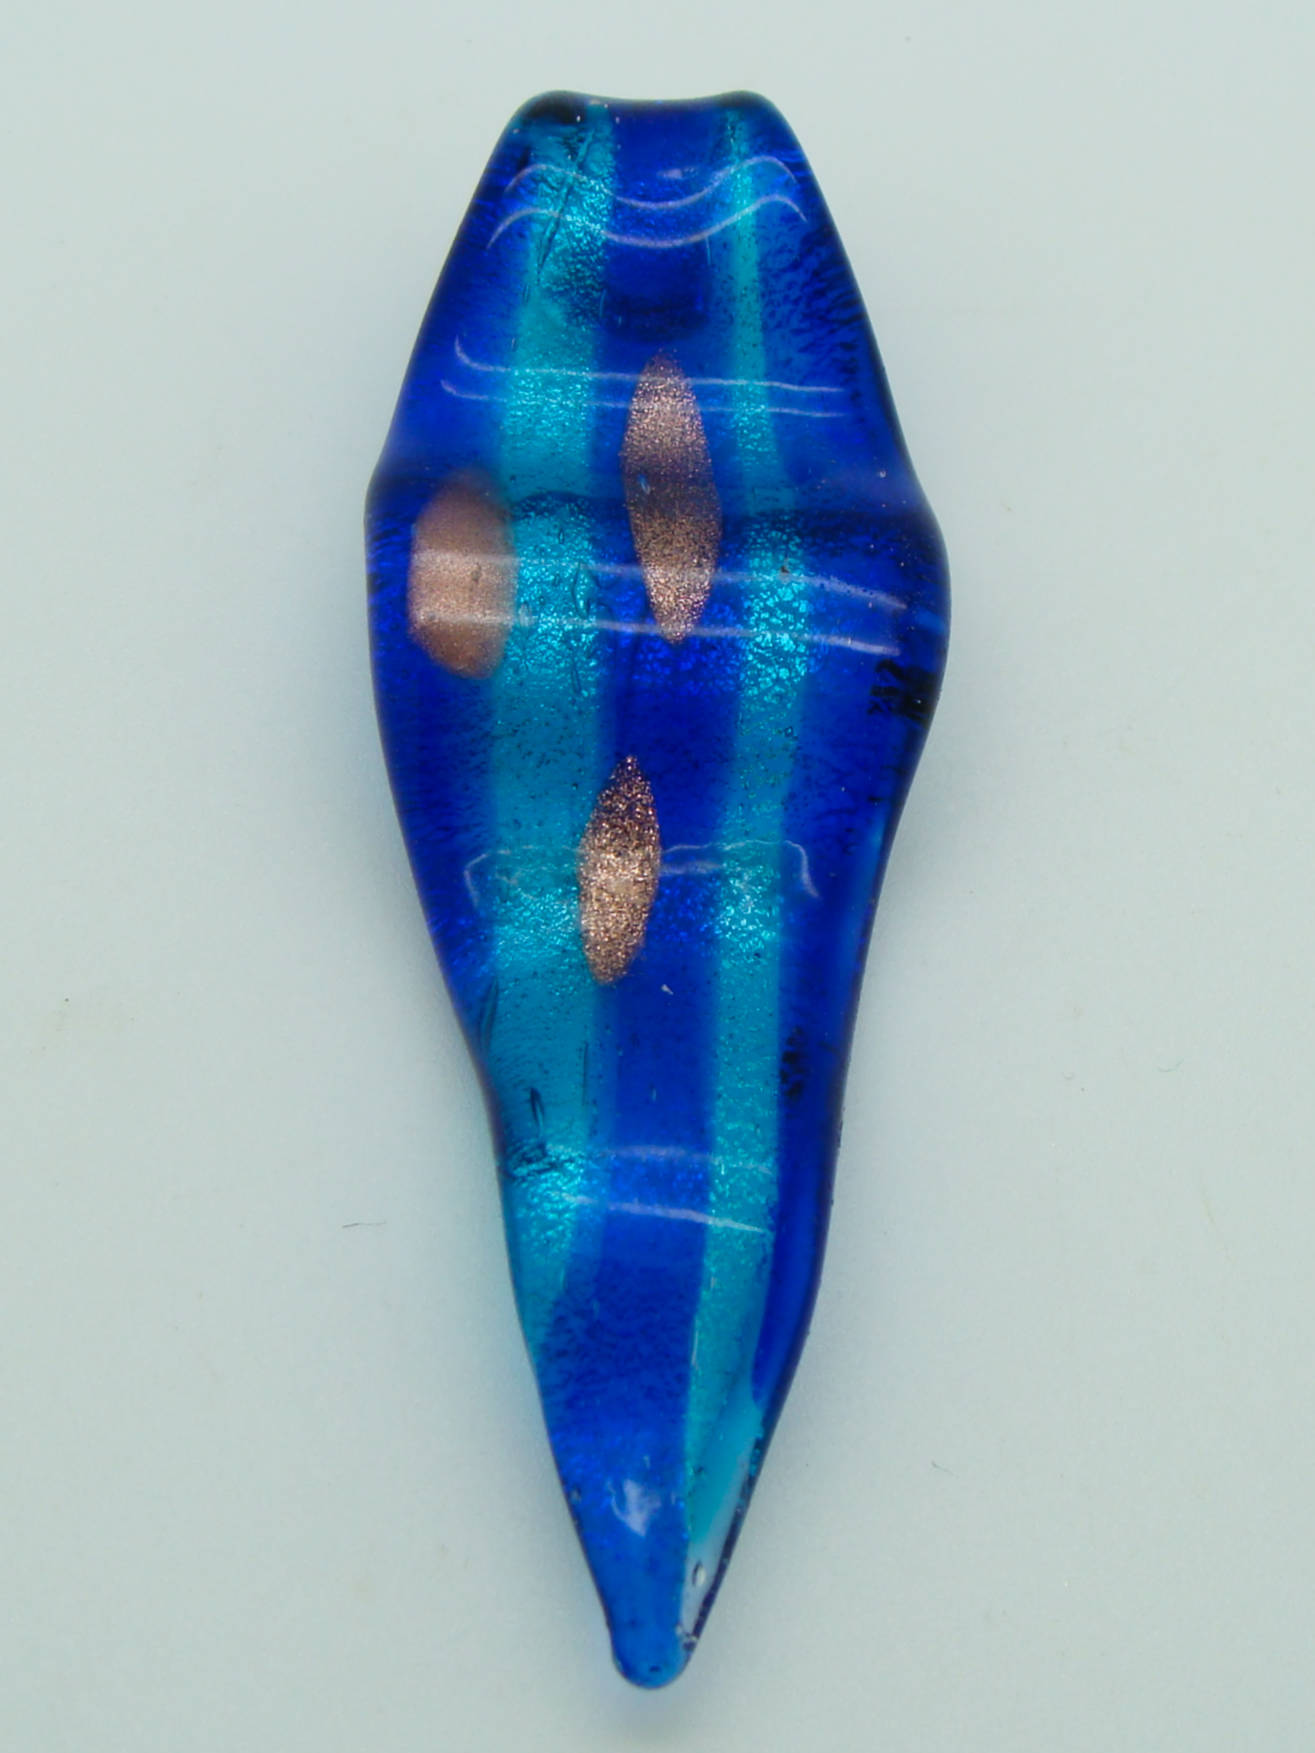 Pend-391-3 pendentif feuille bleu marine lampwork